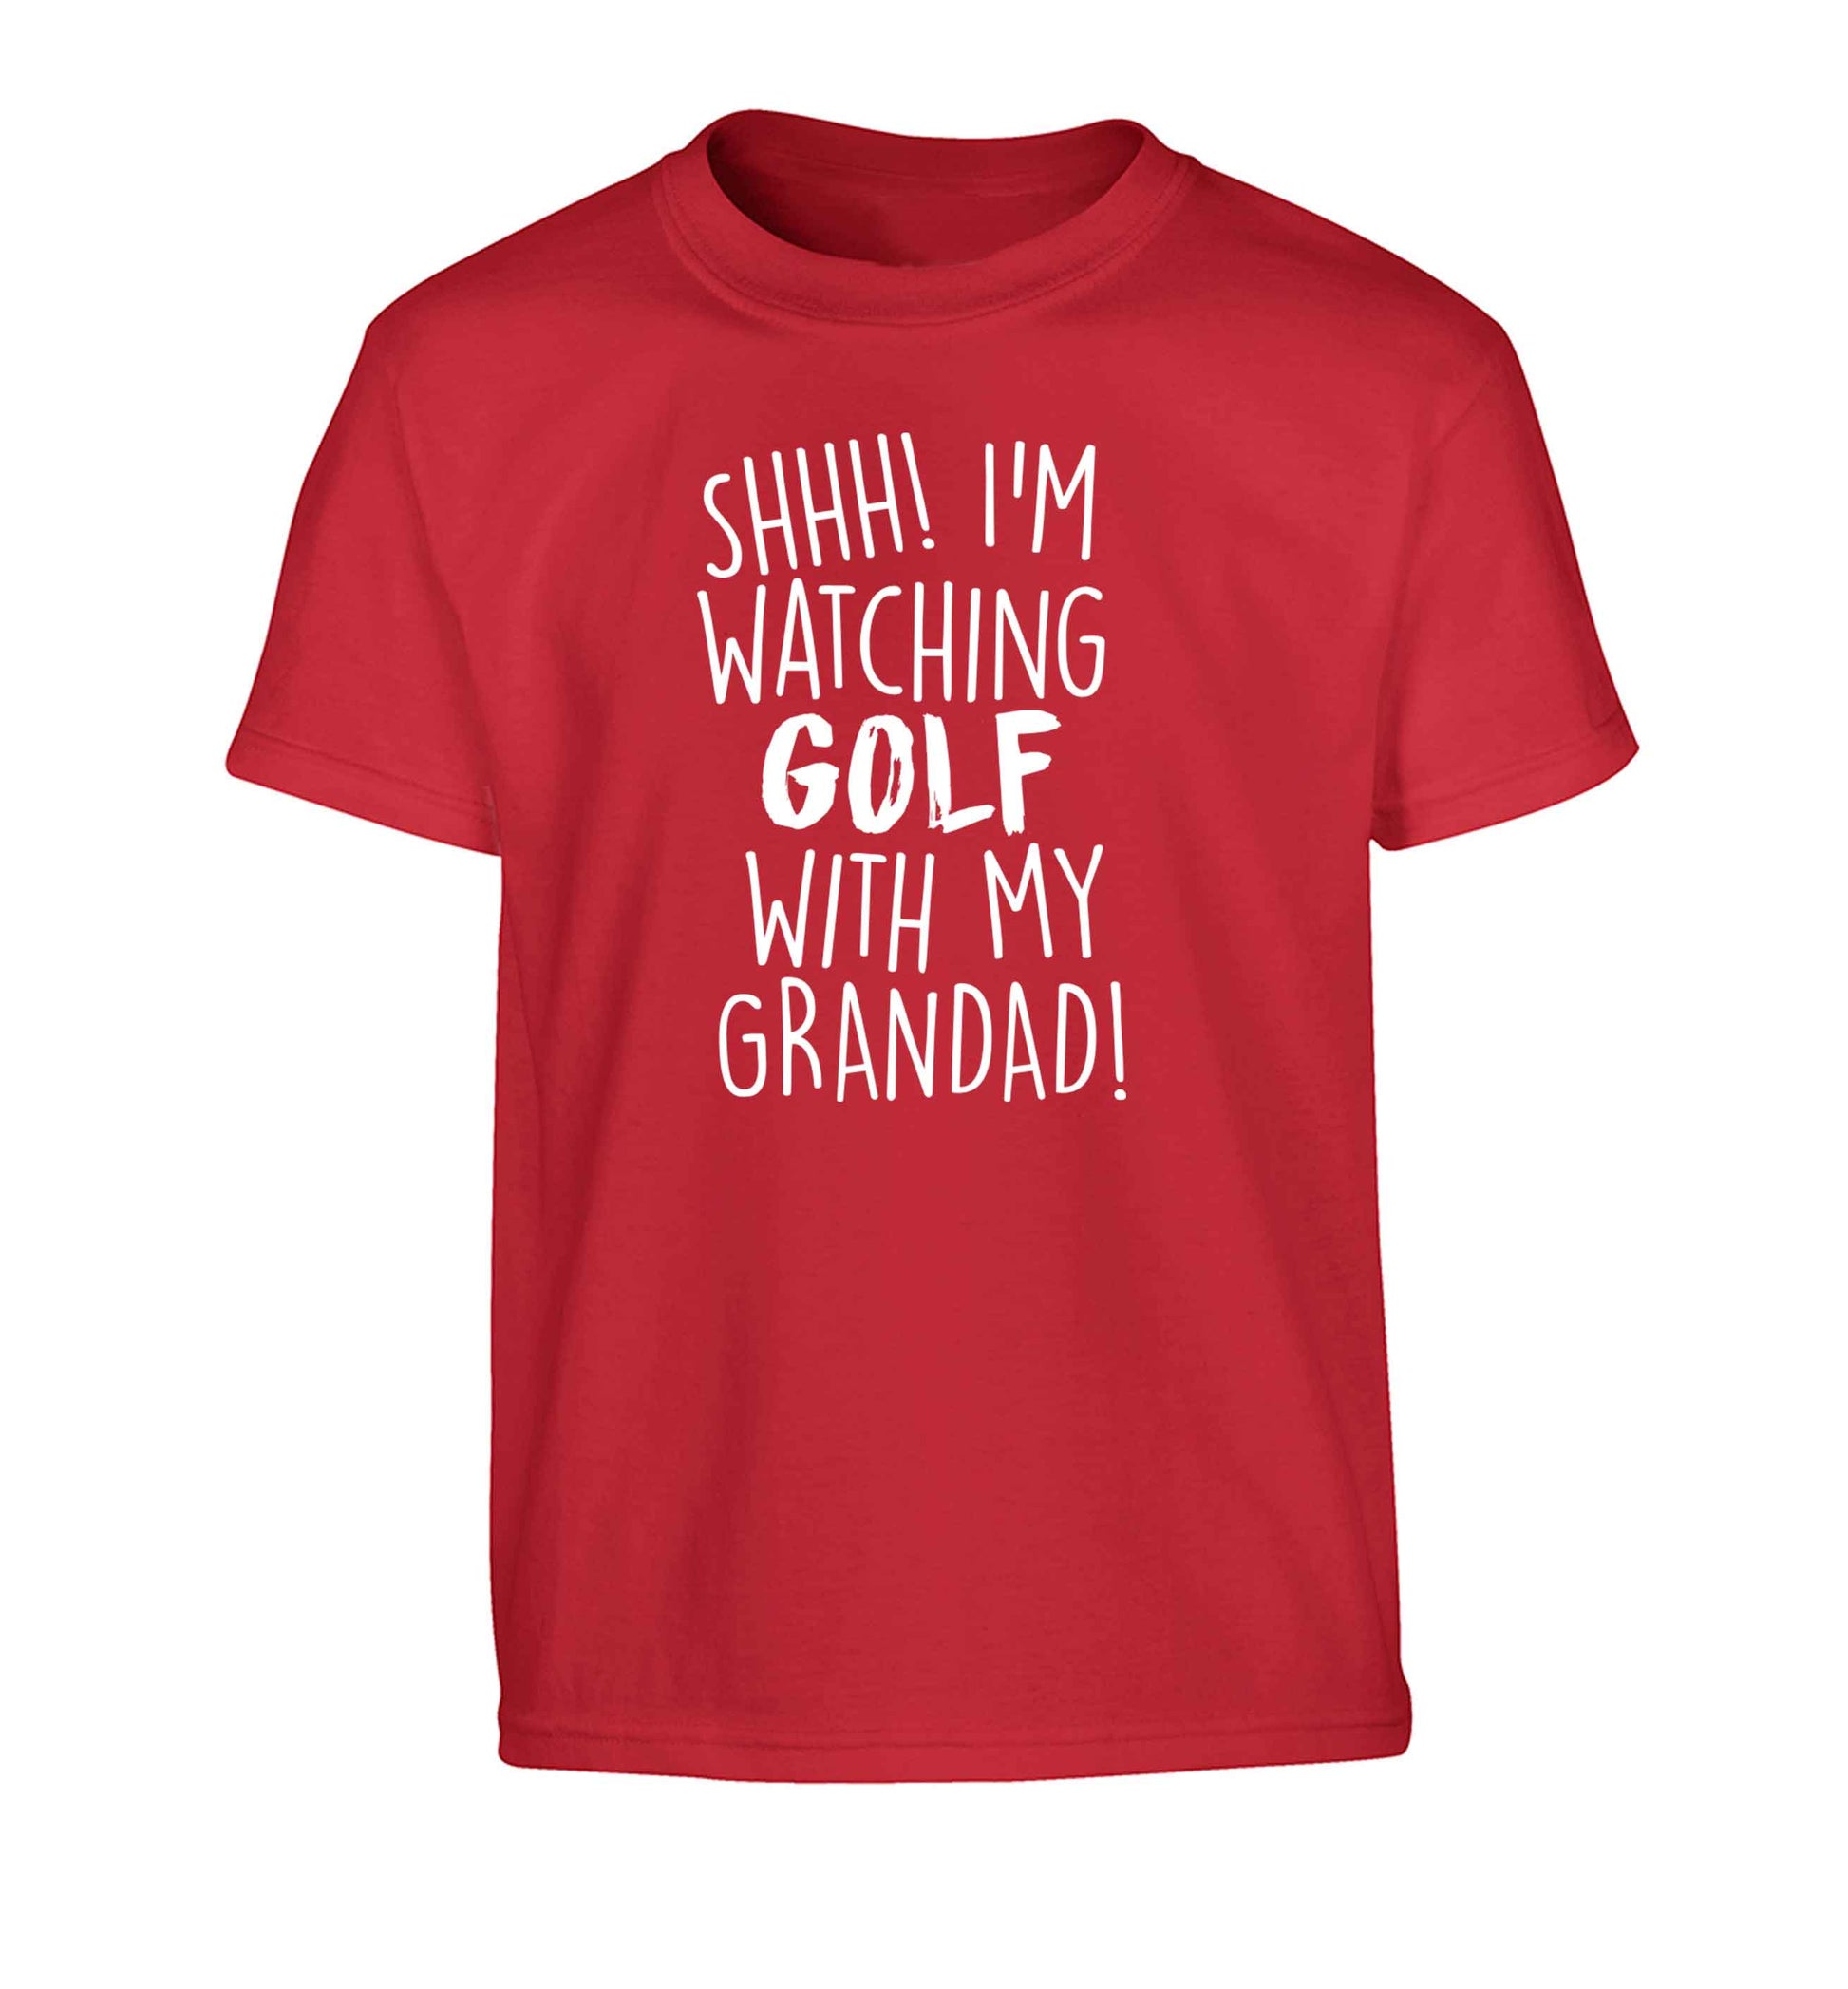 Shh I'm watching golf with my grandad Children's red Tshirt 12-13 Years